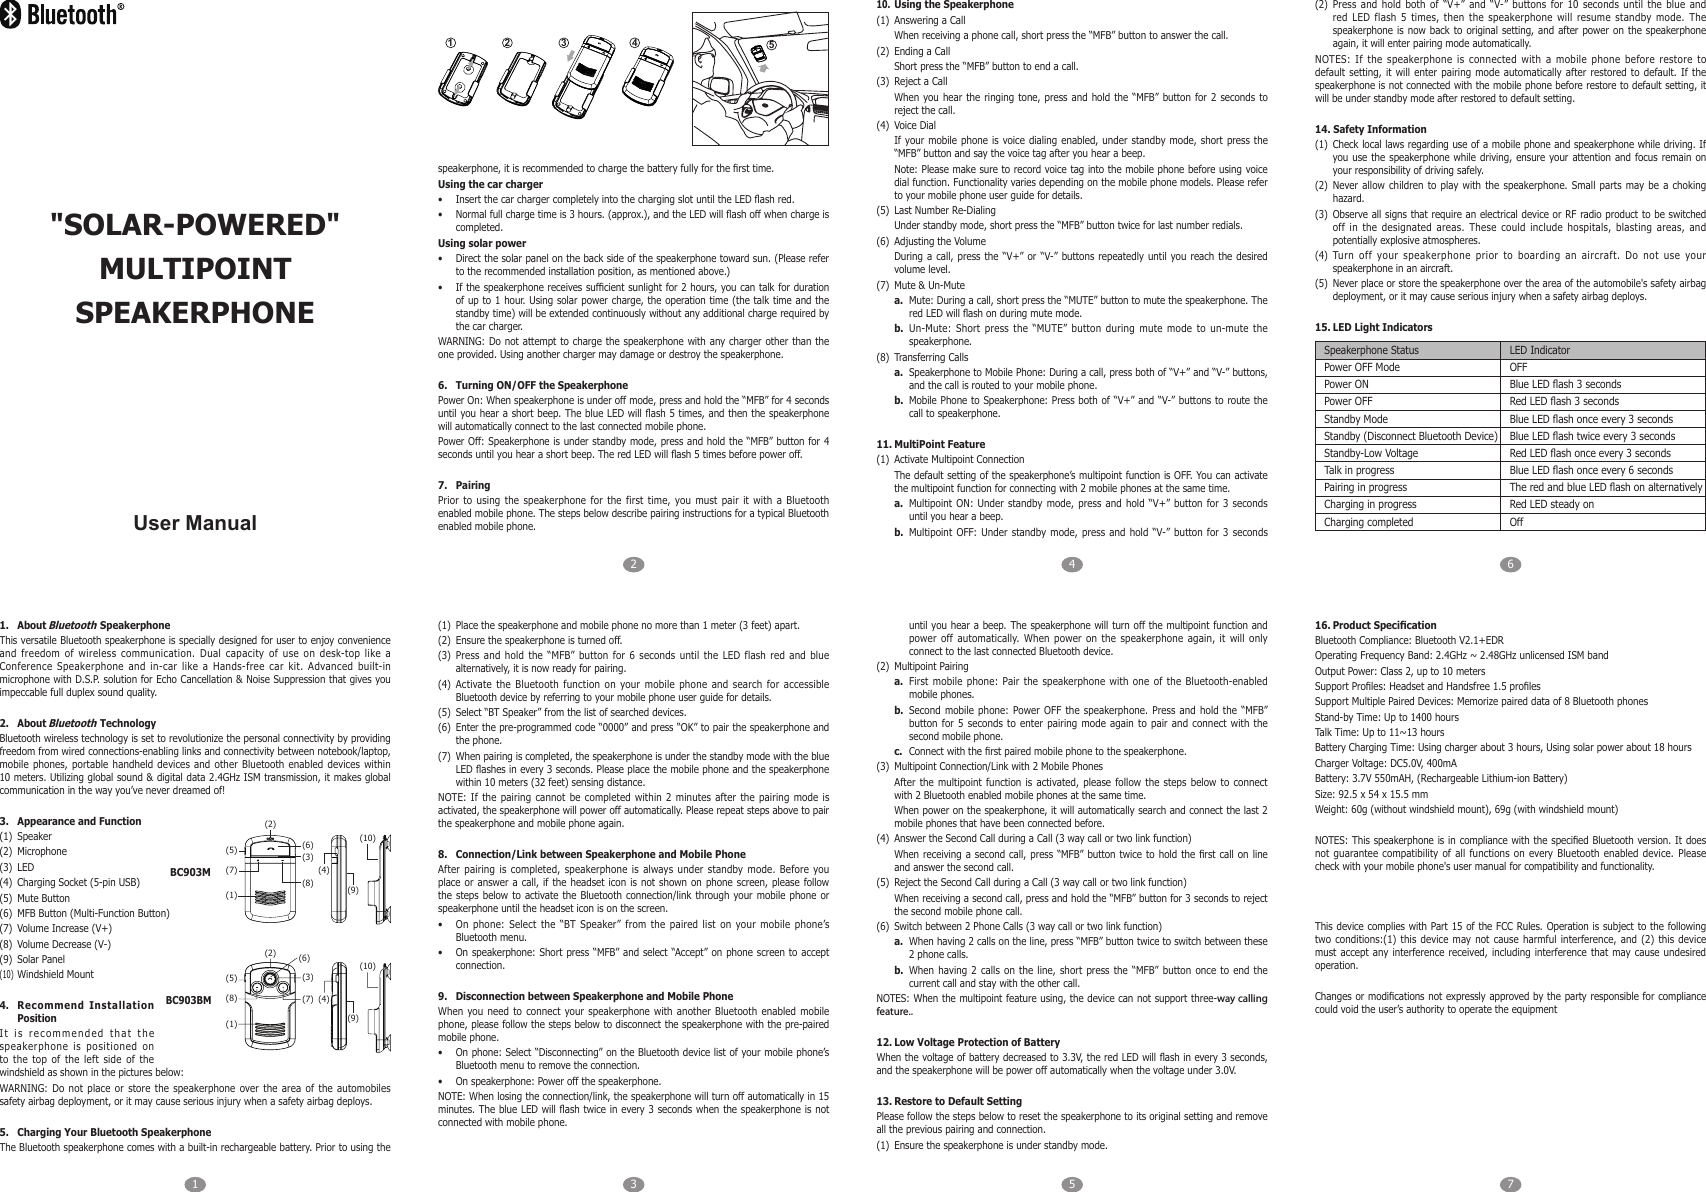 Bluetooth Multipoint Speakerphone 6e User Manual Download - abchongkong